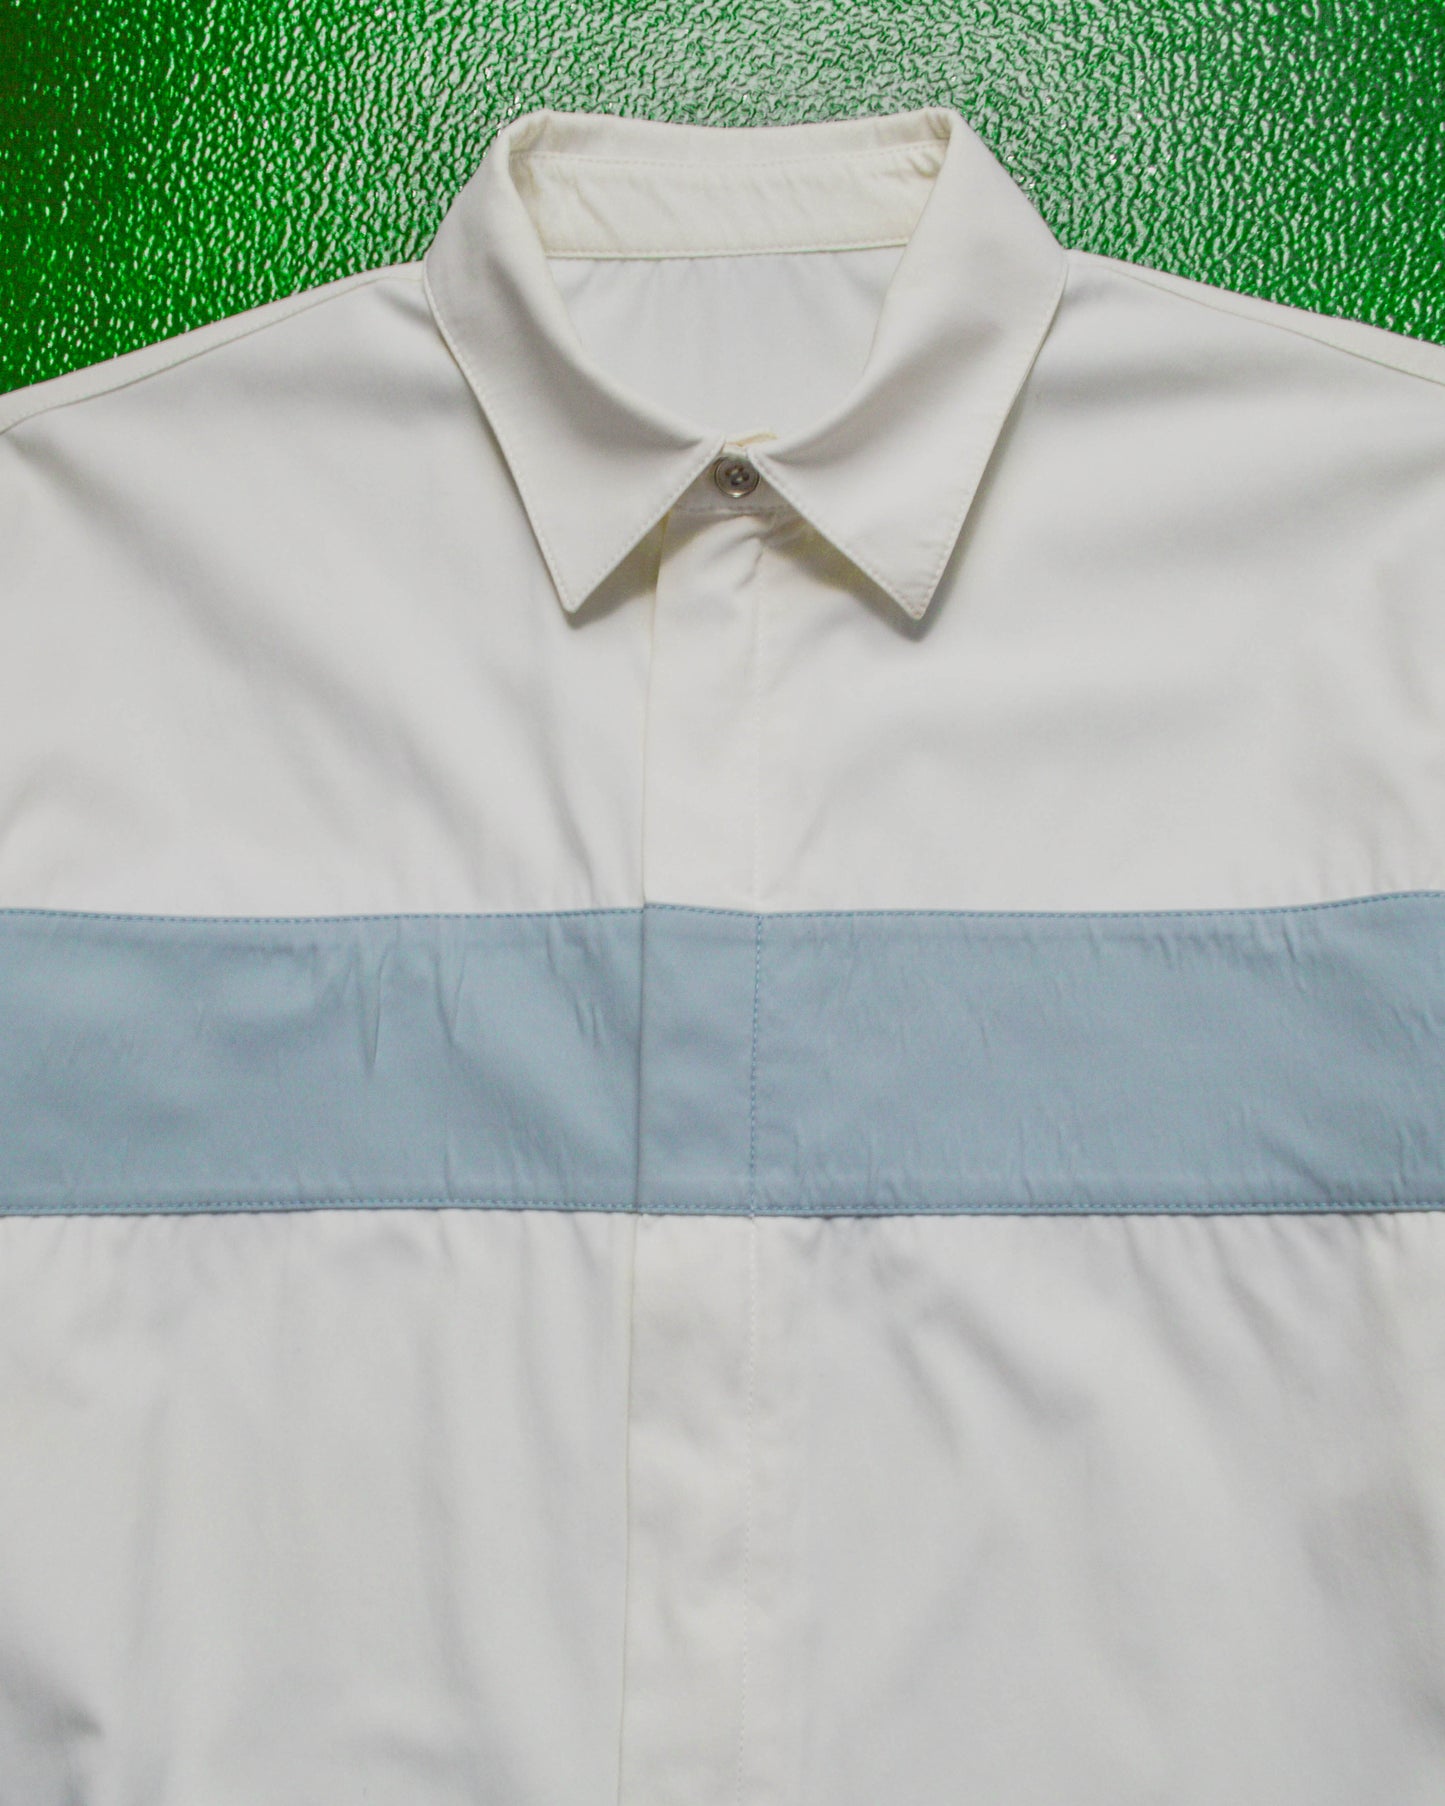 White Panelled Zip Up Nylon Over Shirt (M)